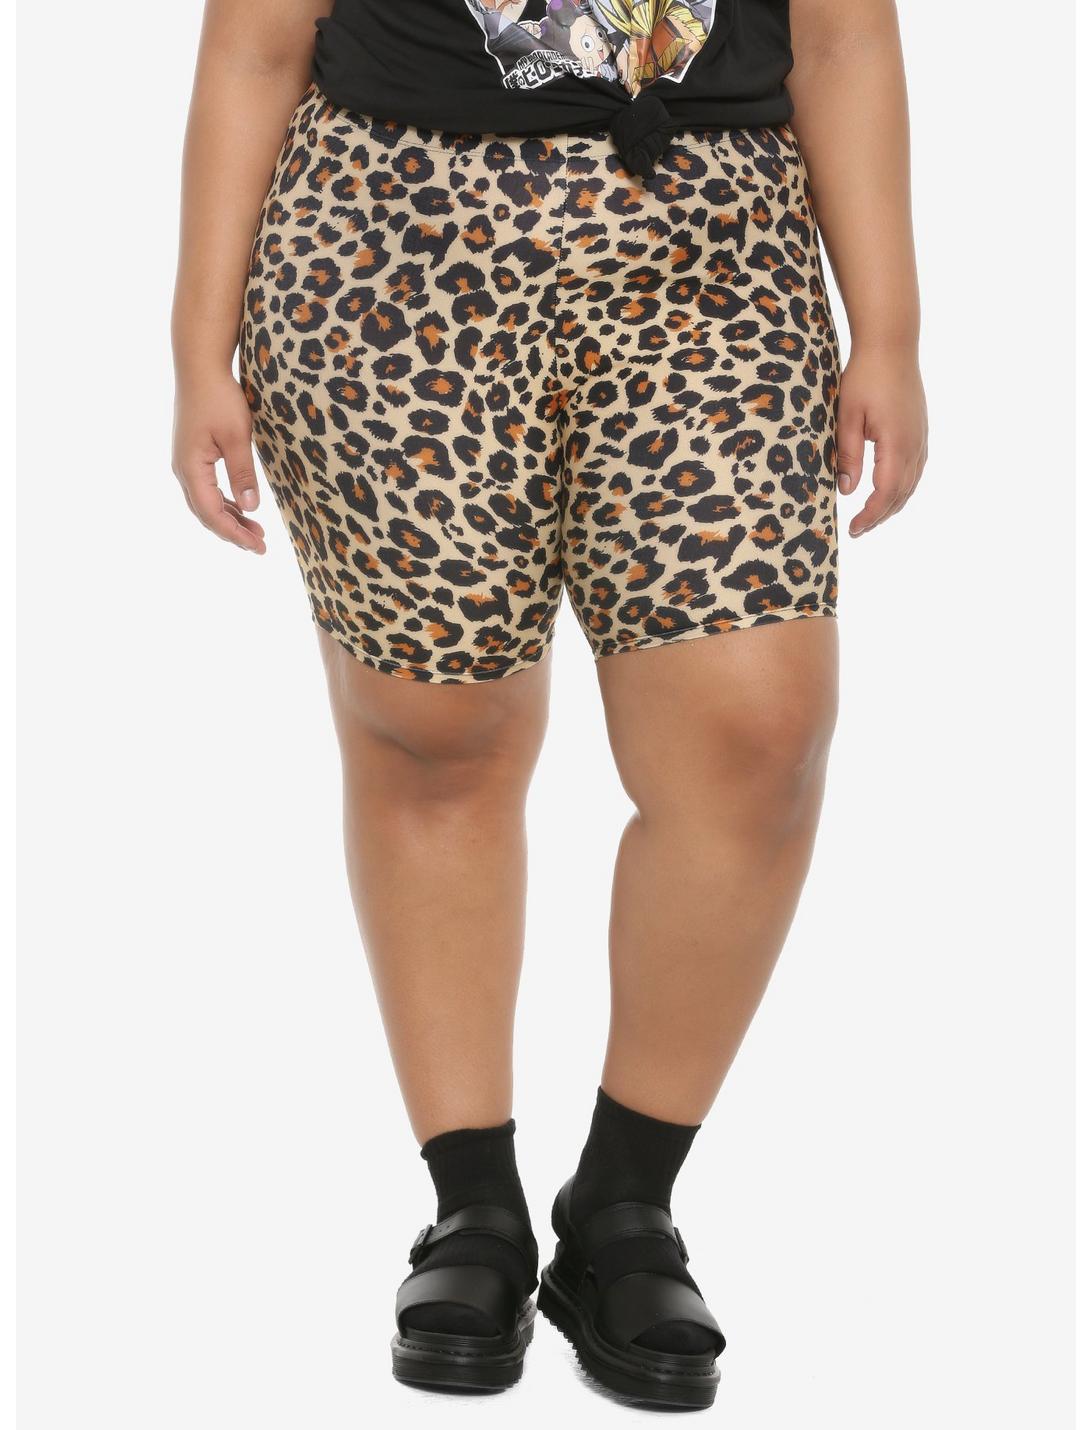 Leopard Girls Bike Shorts Plus Size, LEOPARD, hi-res